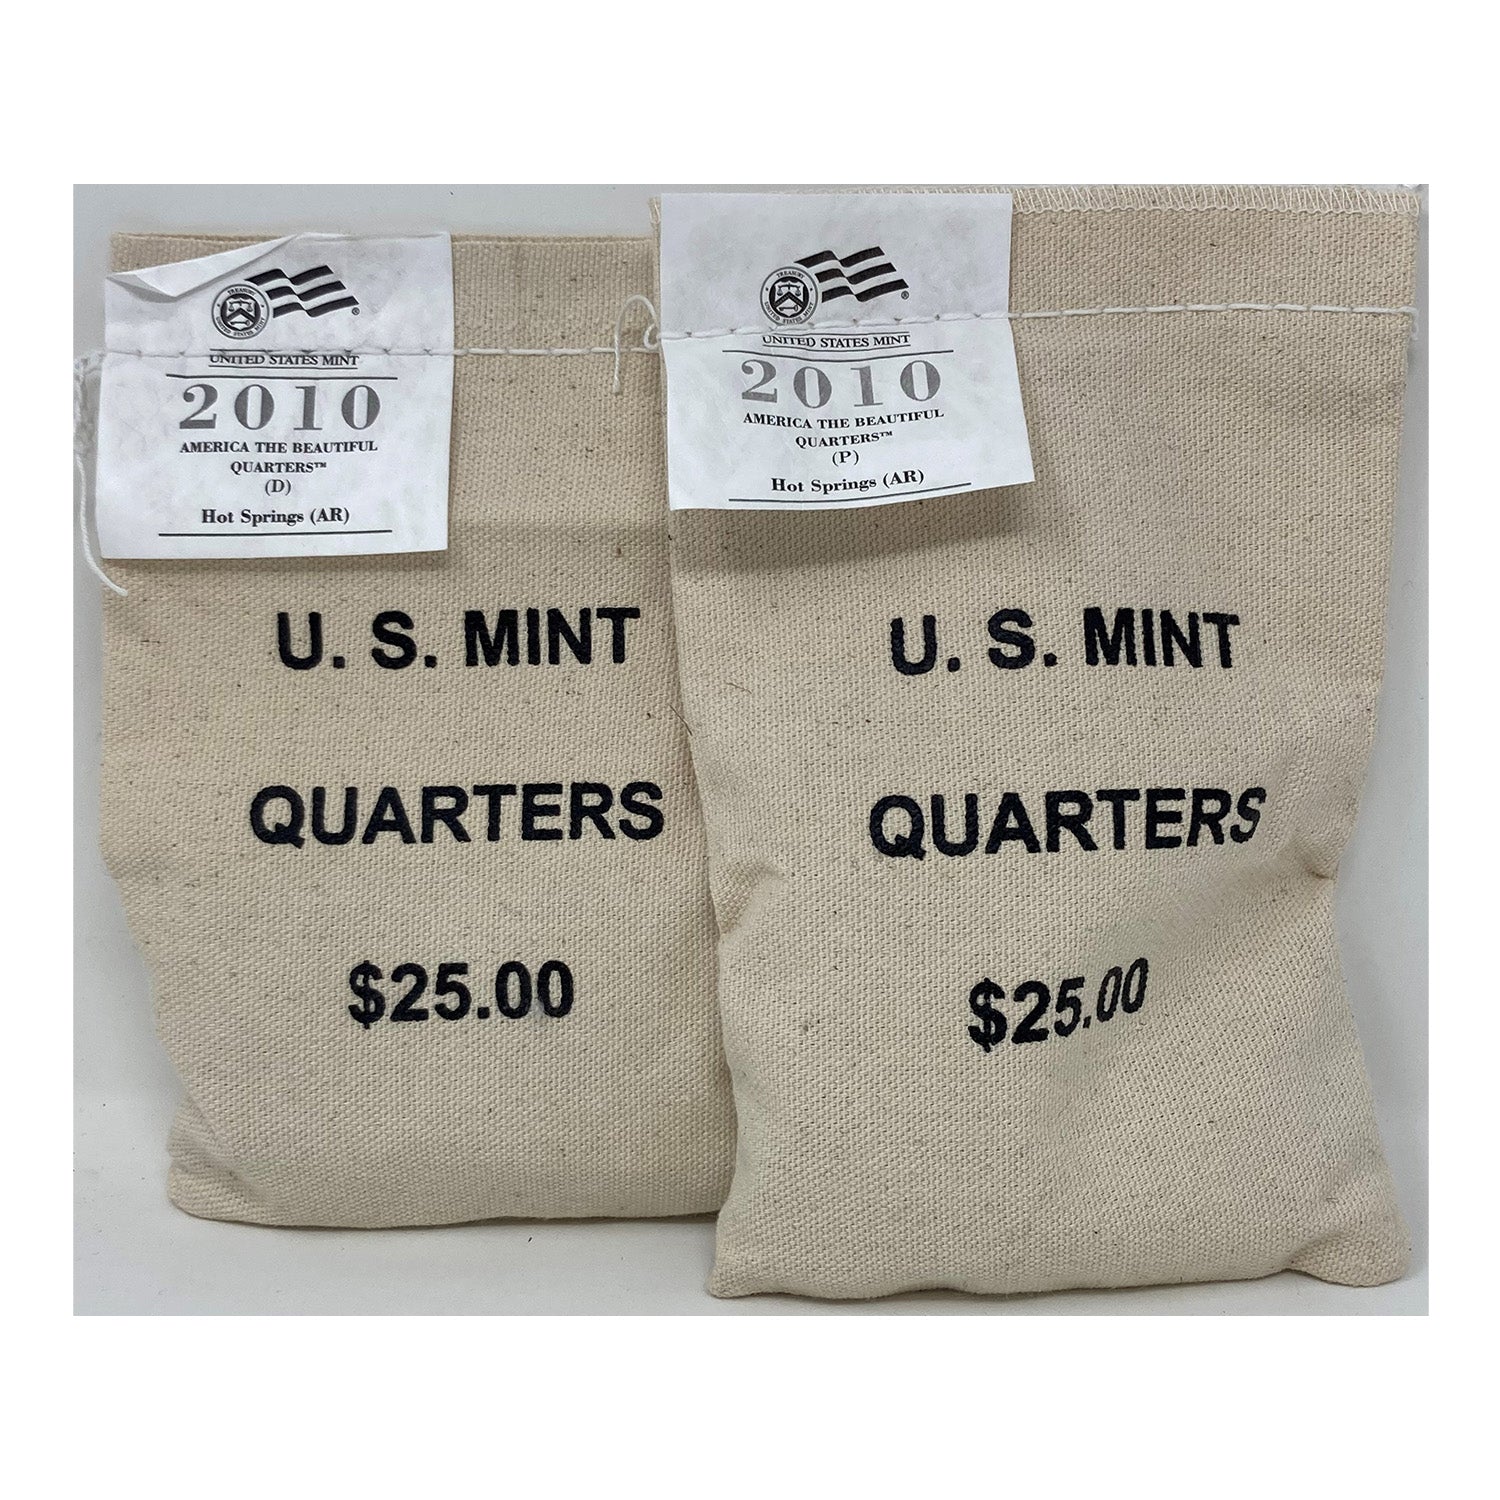 2010 U.S. Mint, Hot Springs America The Beautiful Quarters, $25 P+D UNC Bags